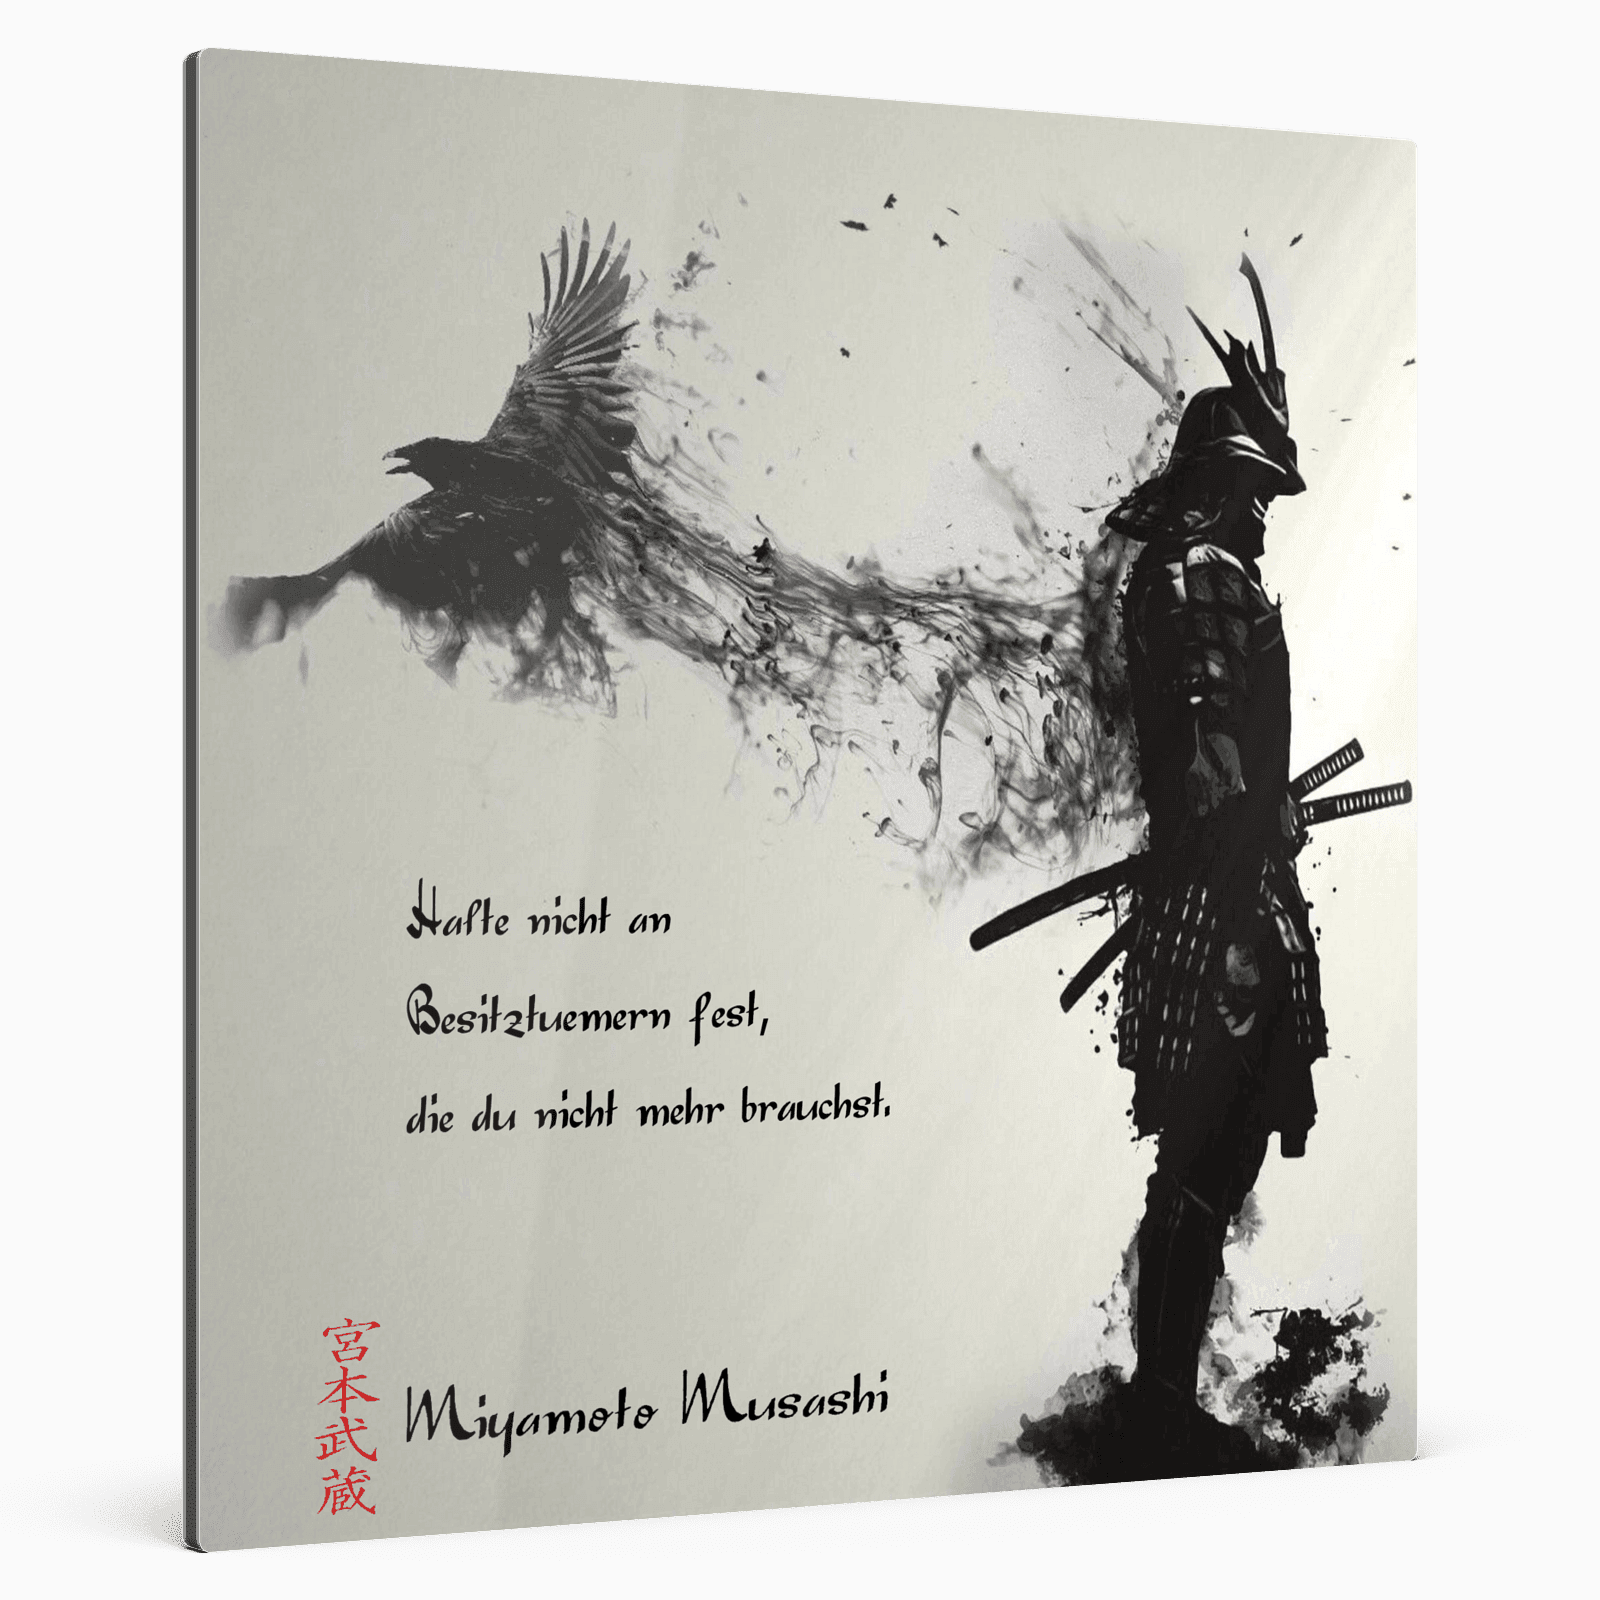 Vierzehnte Regel - Miyamoto Musashi Poster & Bildende Kunst 49.99 Acryl, Alu, Canvas, Fourteenth, Holz, Leinwand, Miyamoto Musashi, Regel, Rule, Verbund, Vierzehnte JLR Design